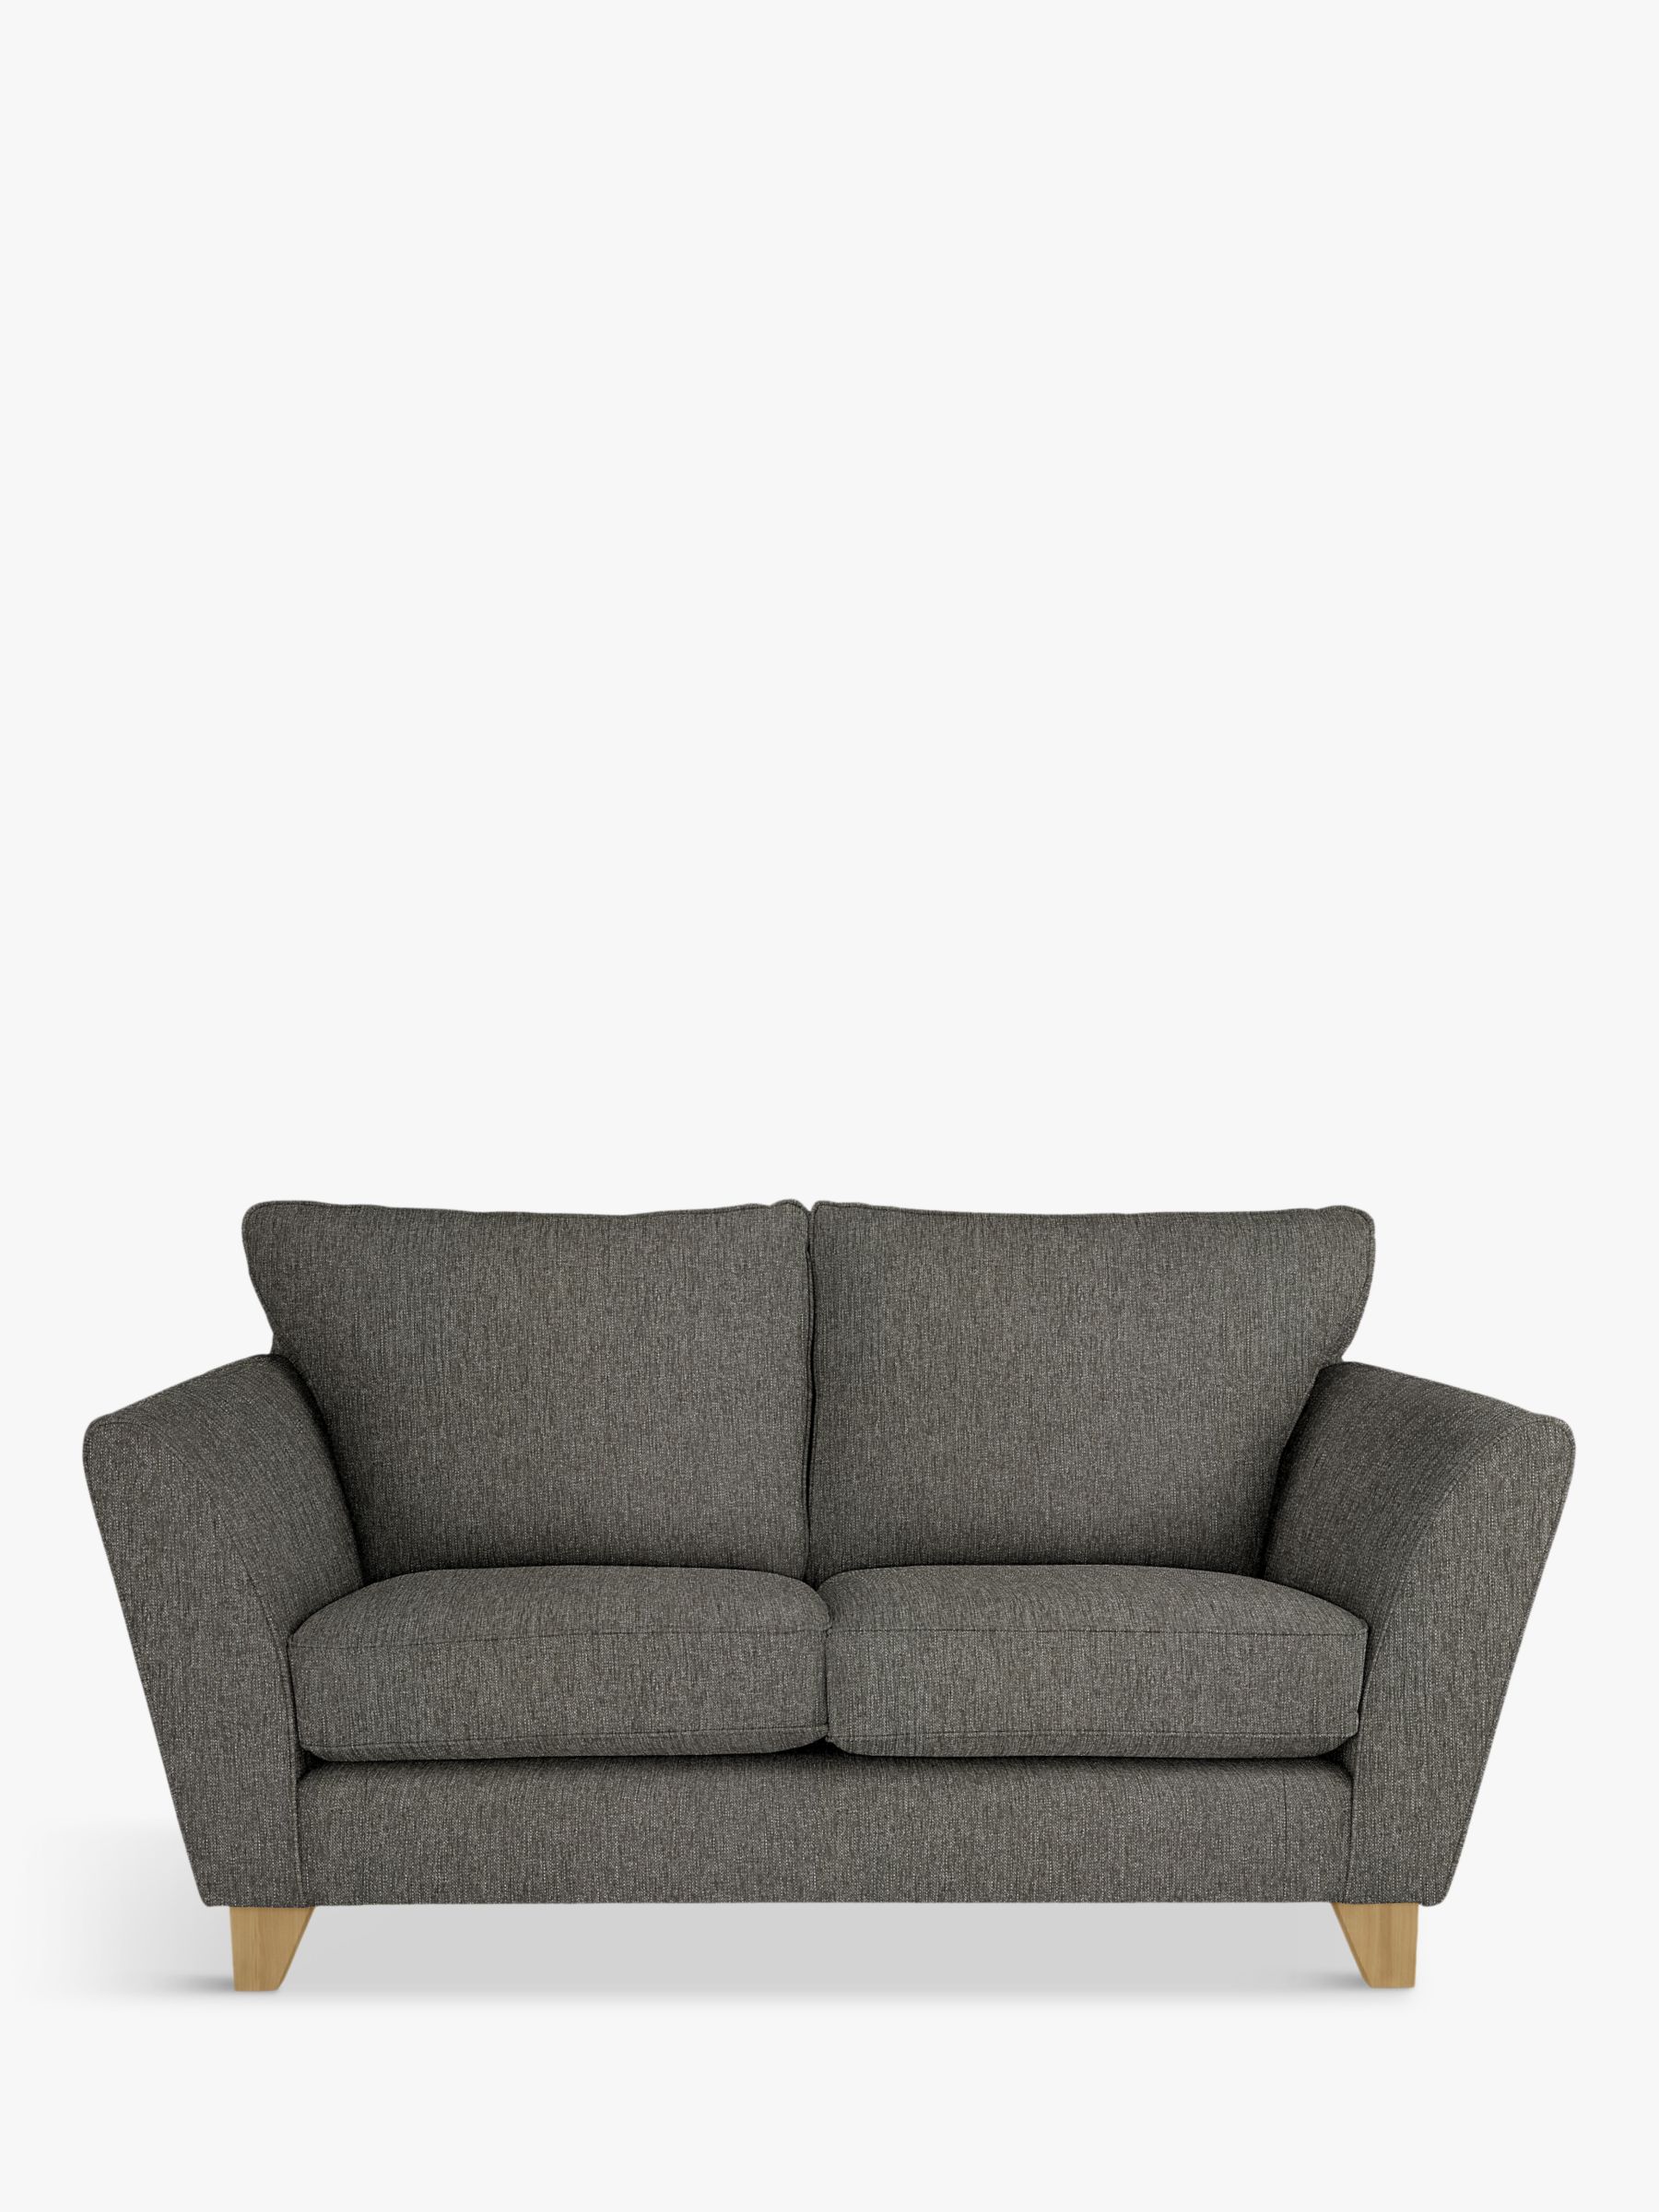 John Lewis & Partners Oslo Small 2 Seater Sofa, Light Leg